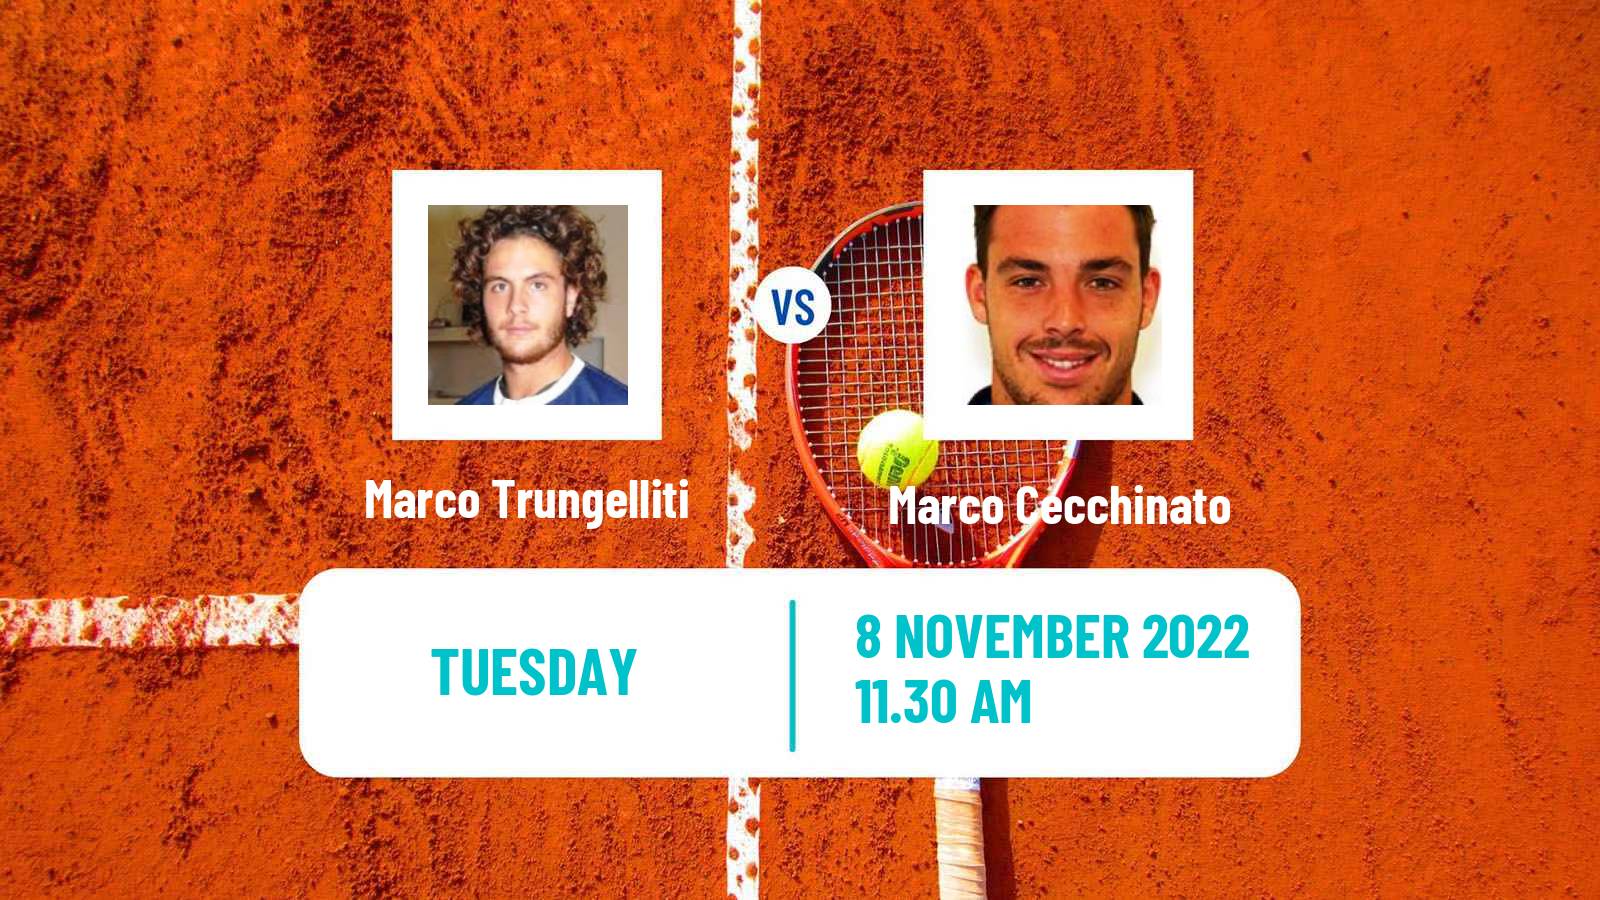 Tennis ATP Challenger Marco Trungelliti - Marco Cecchinato